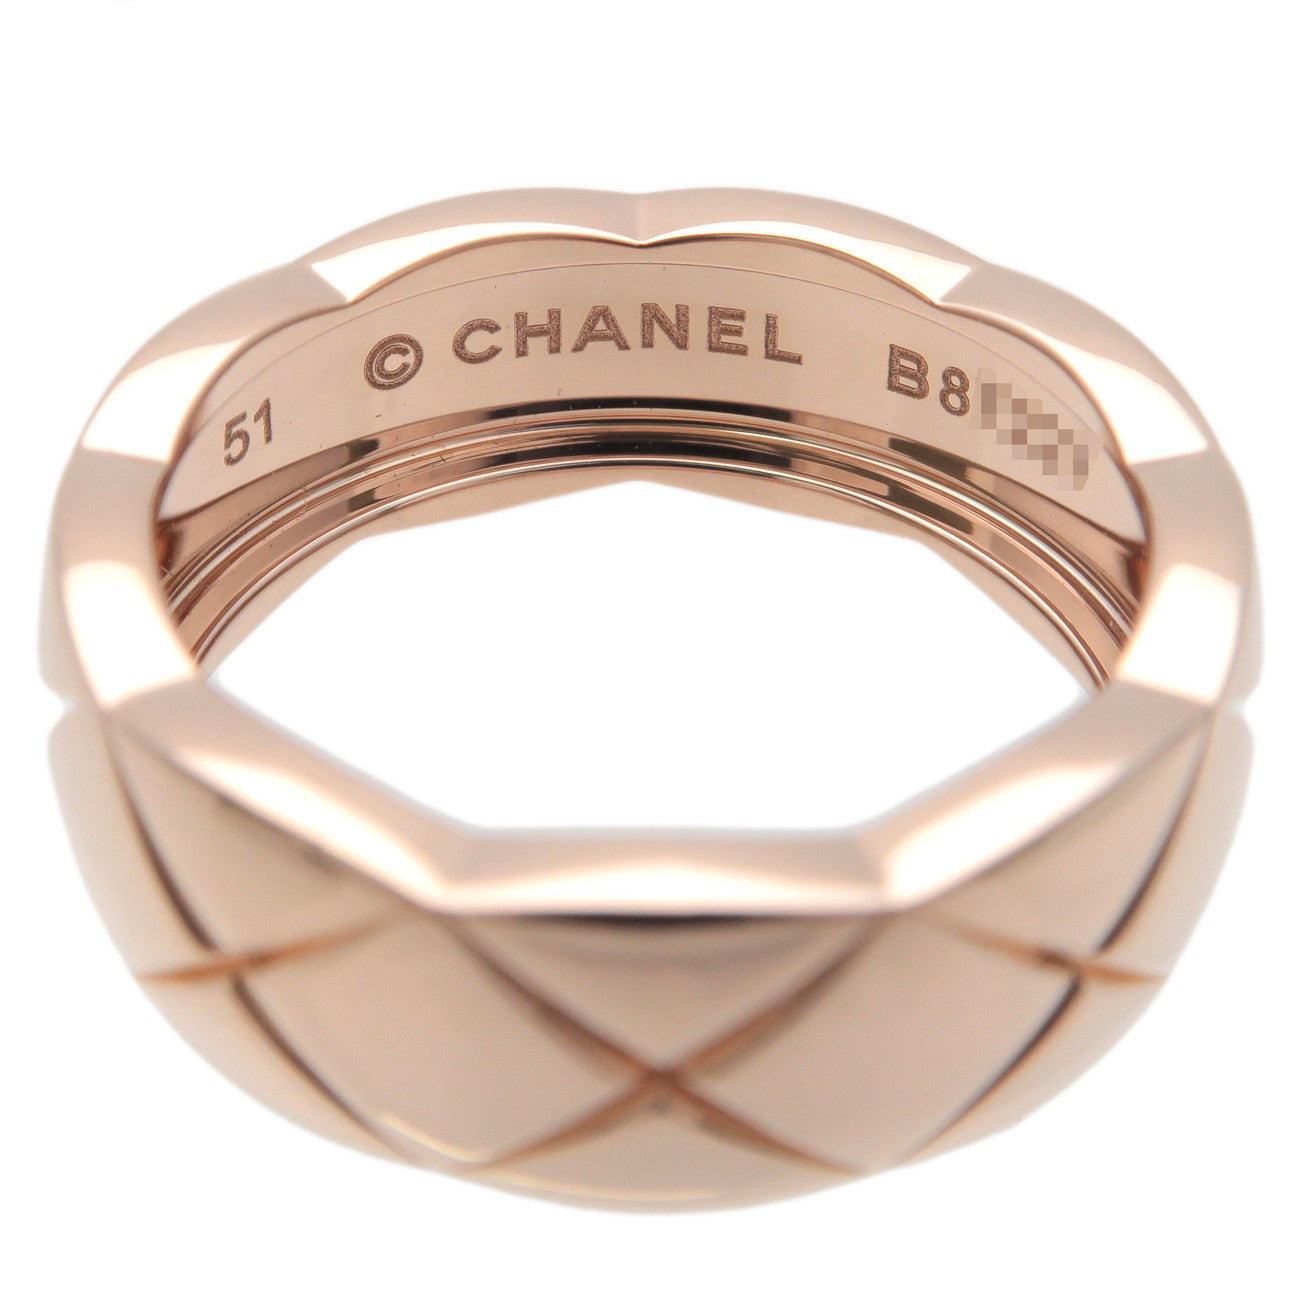 CHANEL-COCO-Crush-Ring-K18PG-750PG-Rose-Gold-#51-US5.5-6-EU51.5